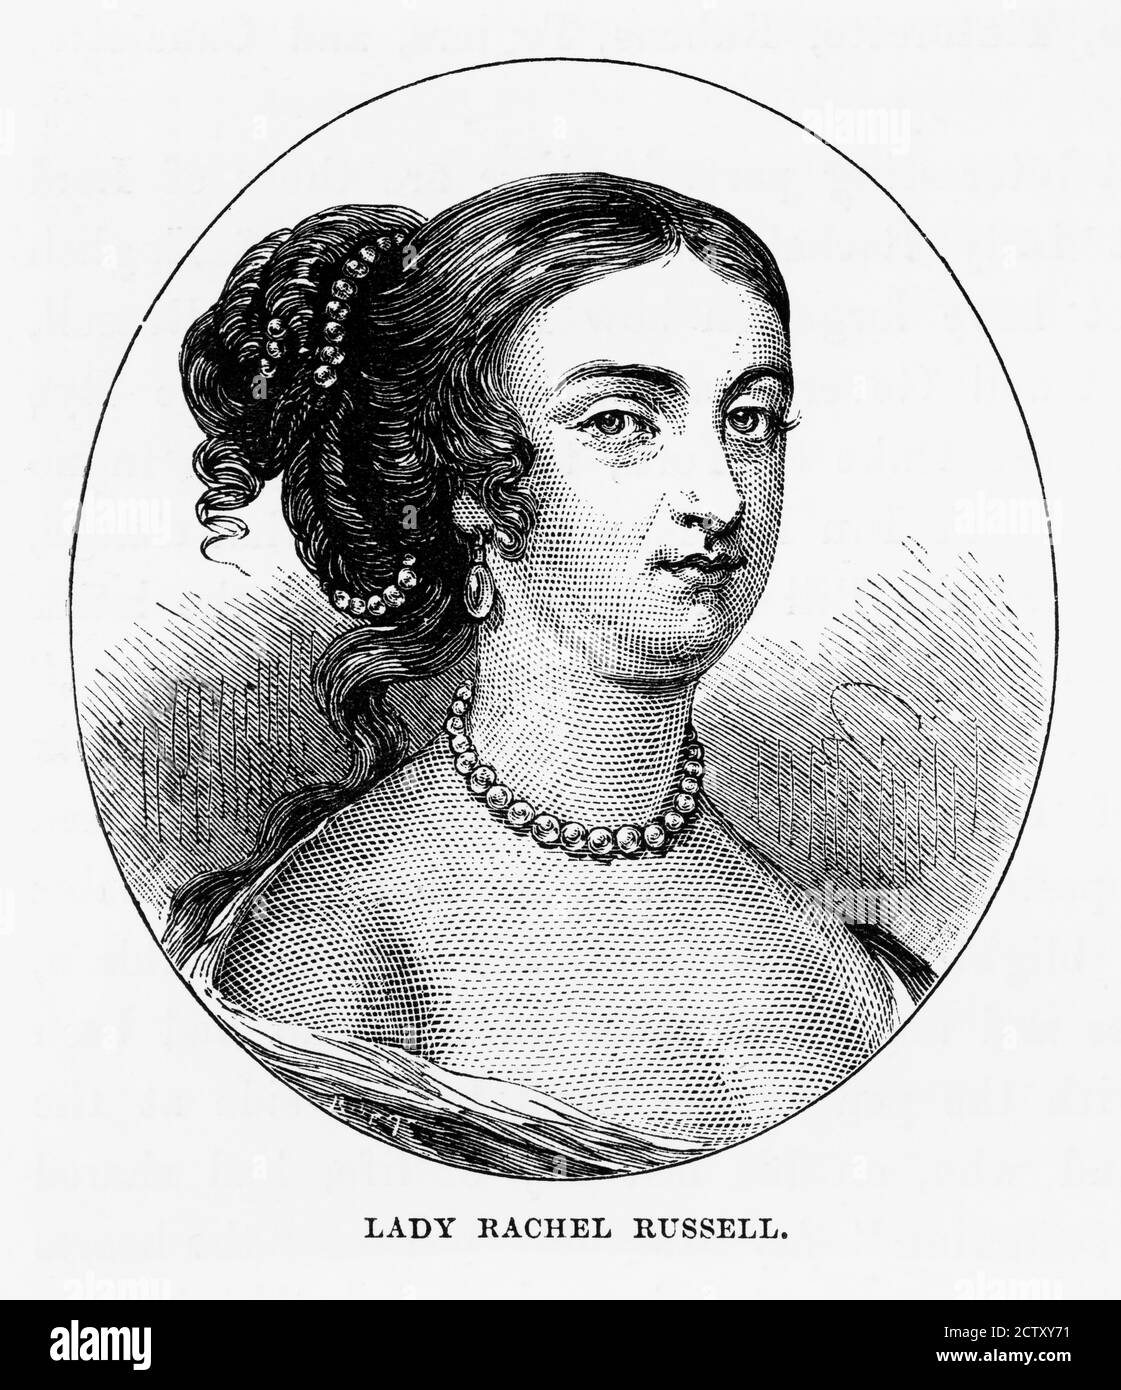 Lady Rachel Russell de Woburn, Angleterre gravure victorienne, Circa 1840 Banque D'Images